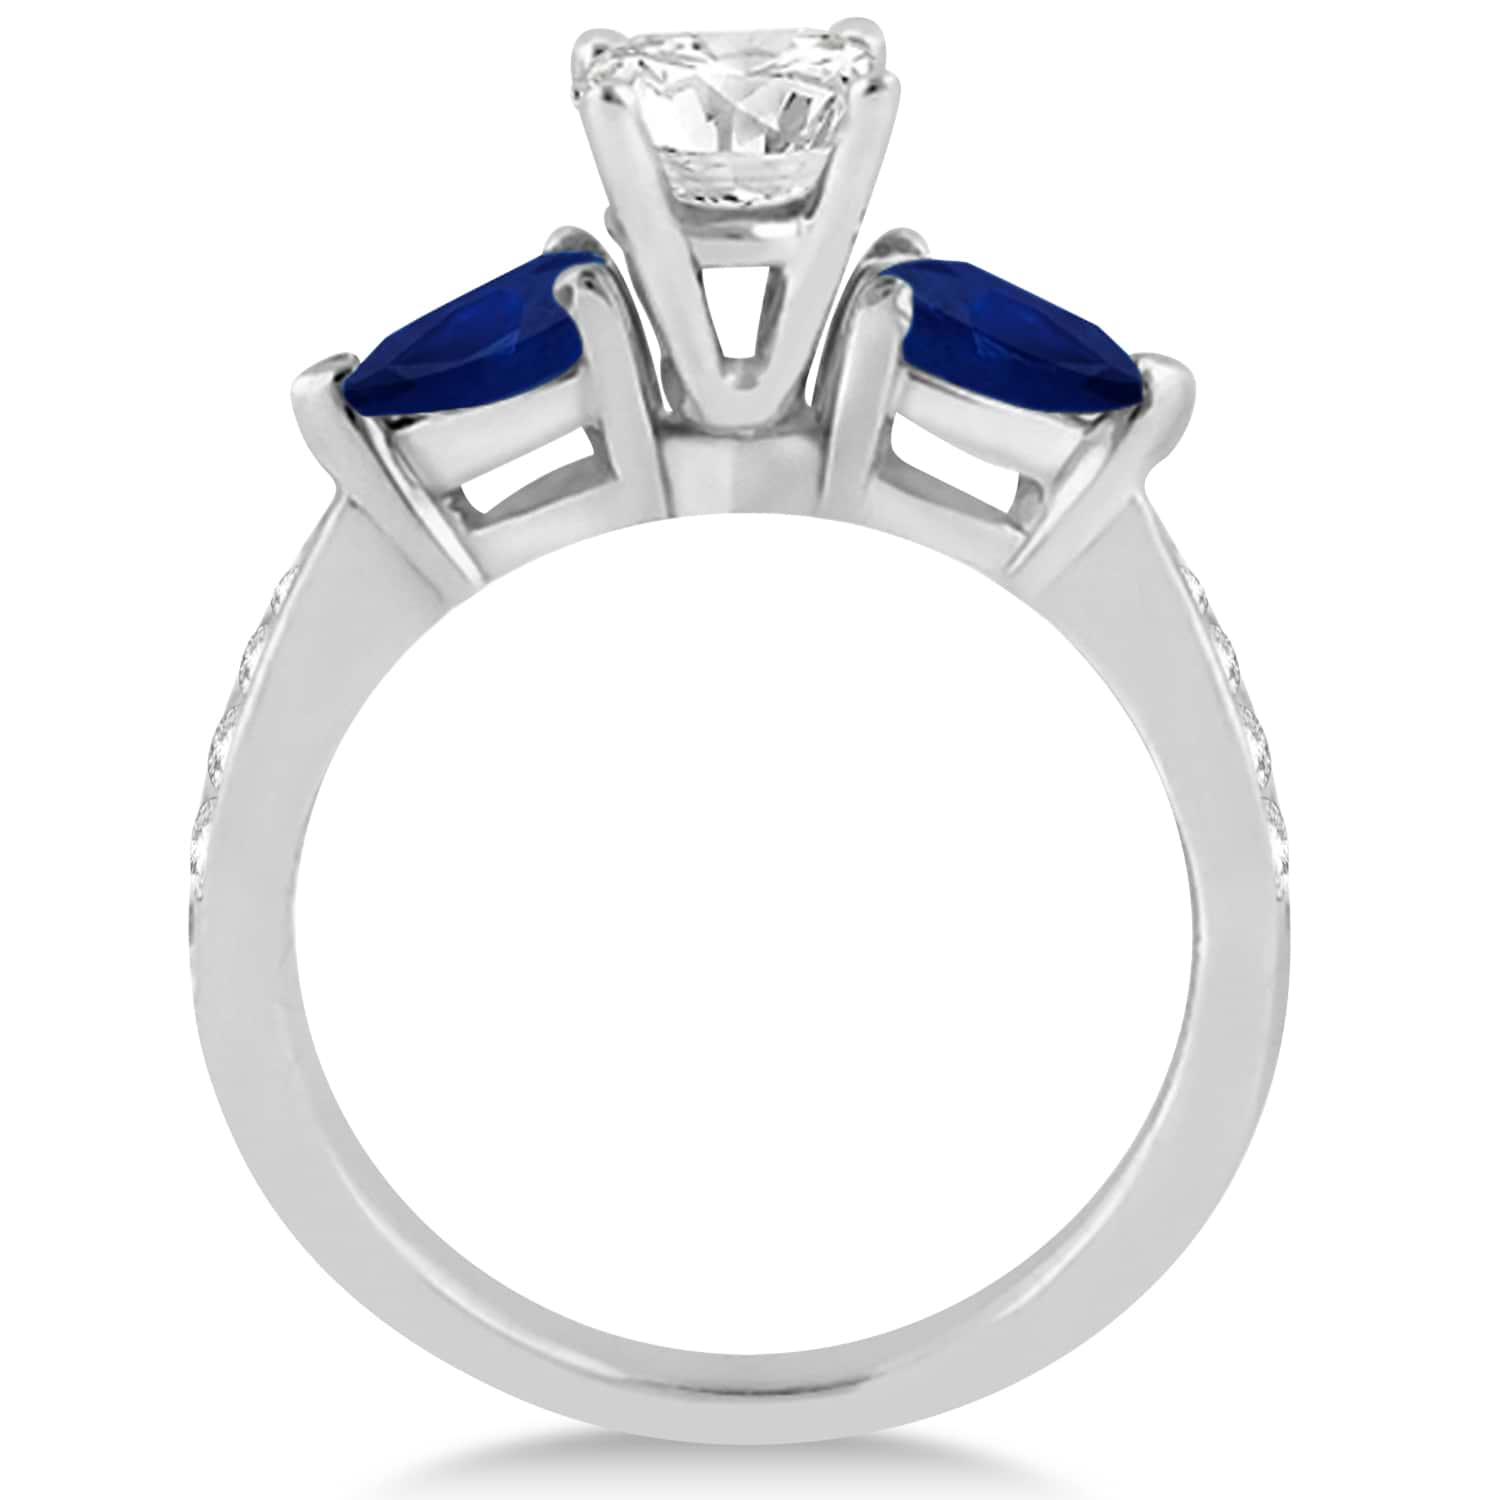 Round Diamond & Pear Blue Sapphire Engagement Ring 14k White Gold (1.29ct)